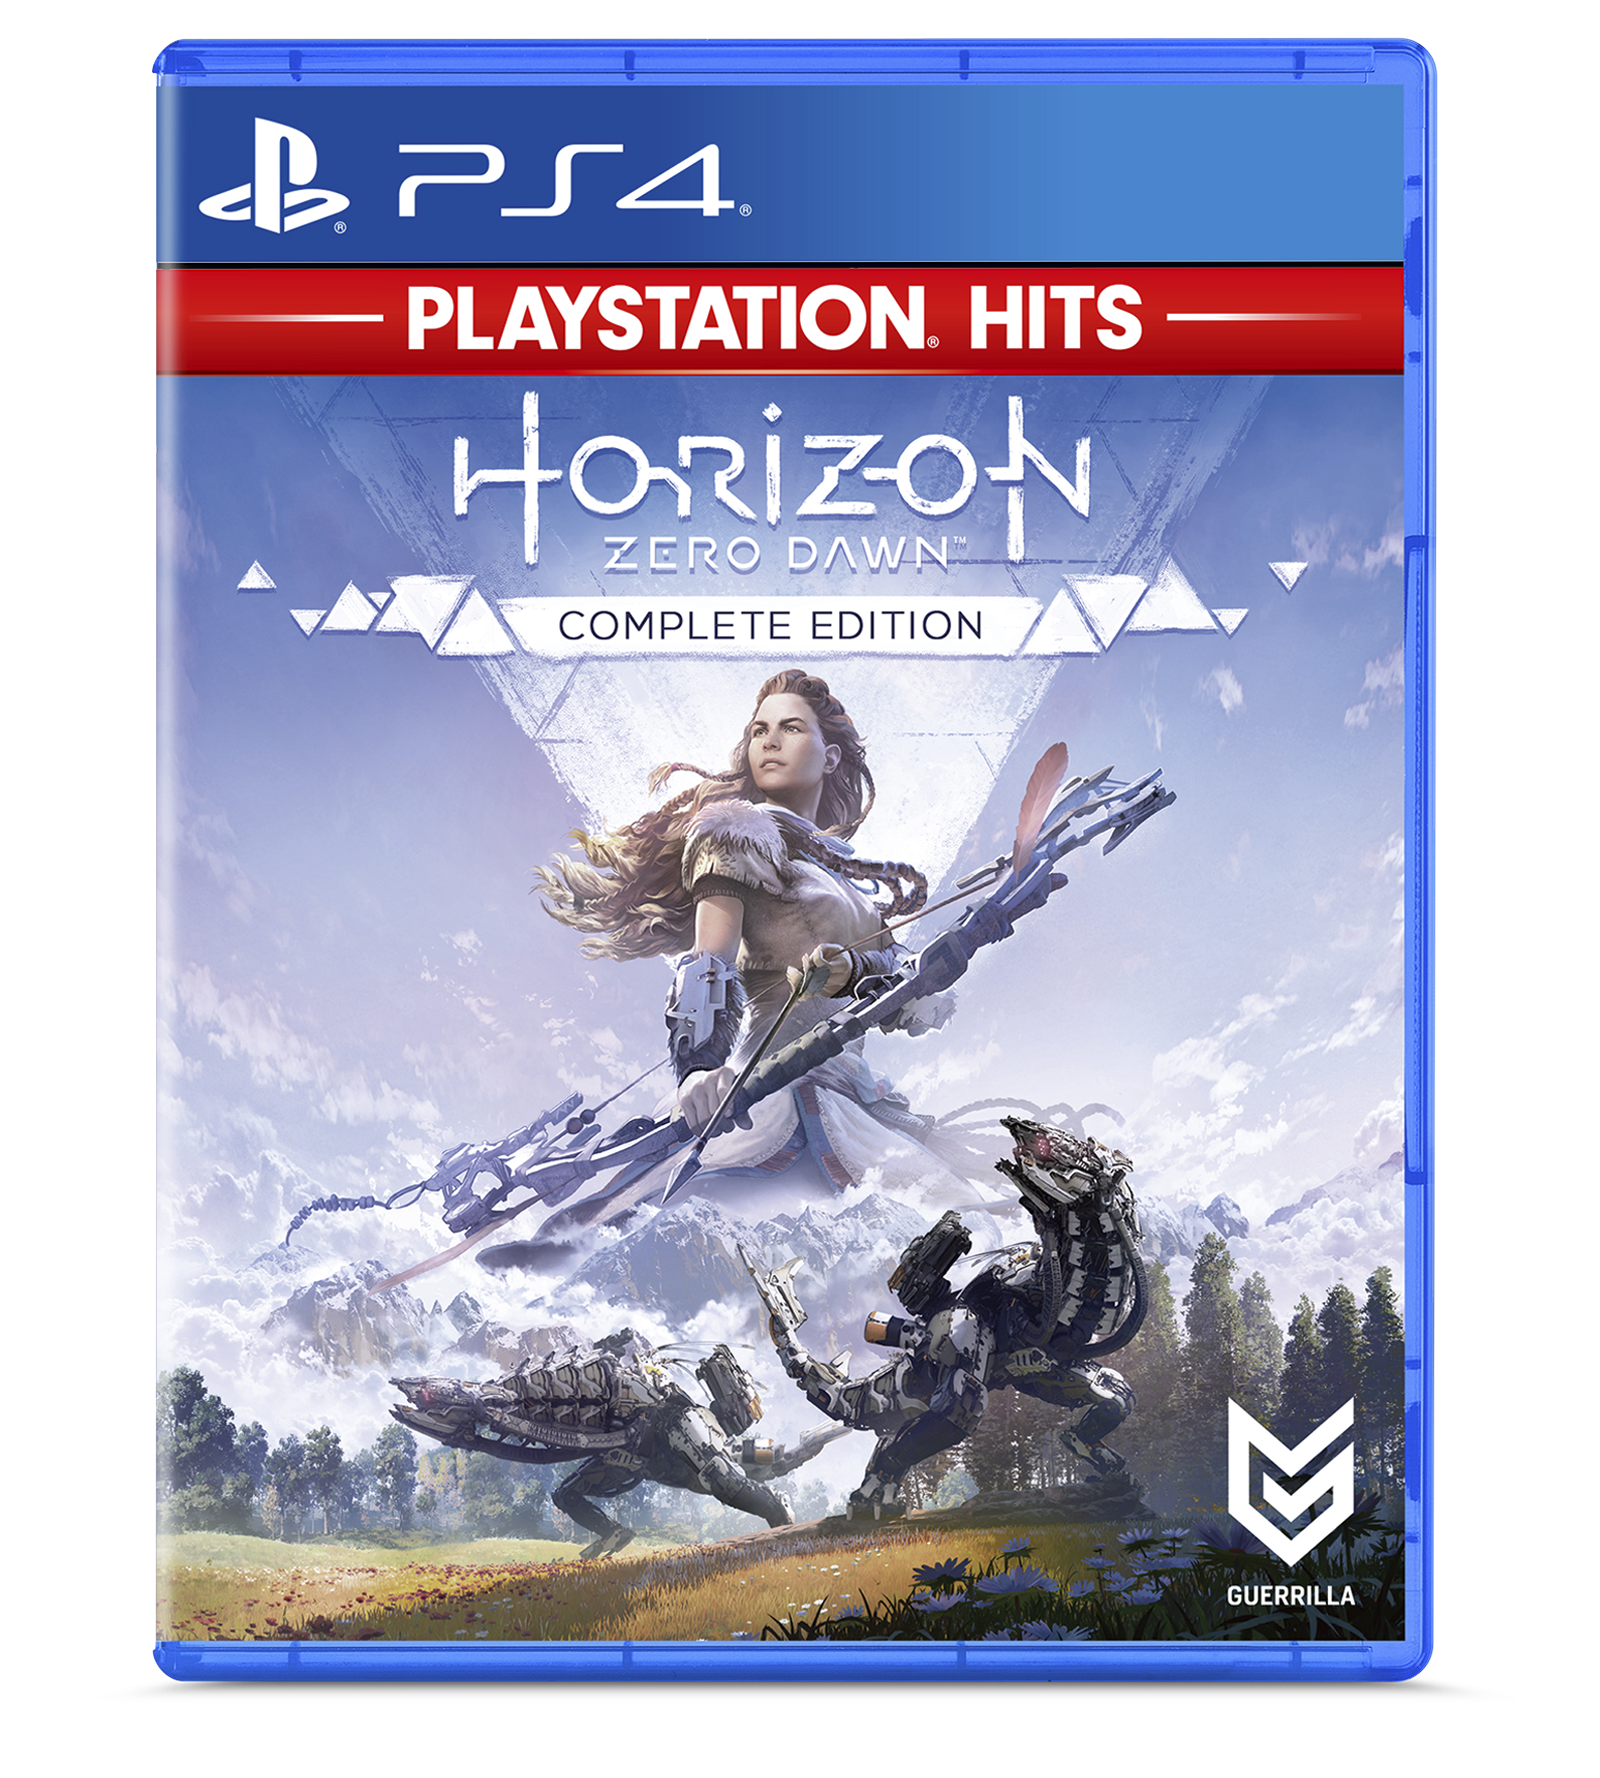 PlayStation 4 Horizon Zero Dawn Complete Edition PlayStation Hits